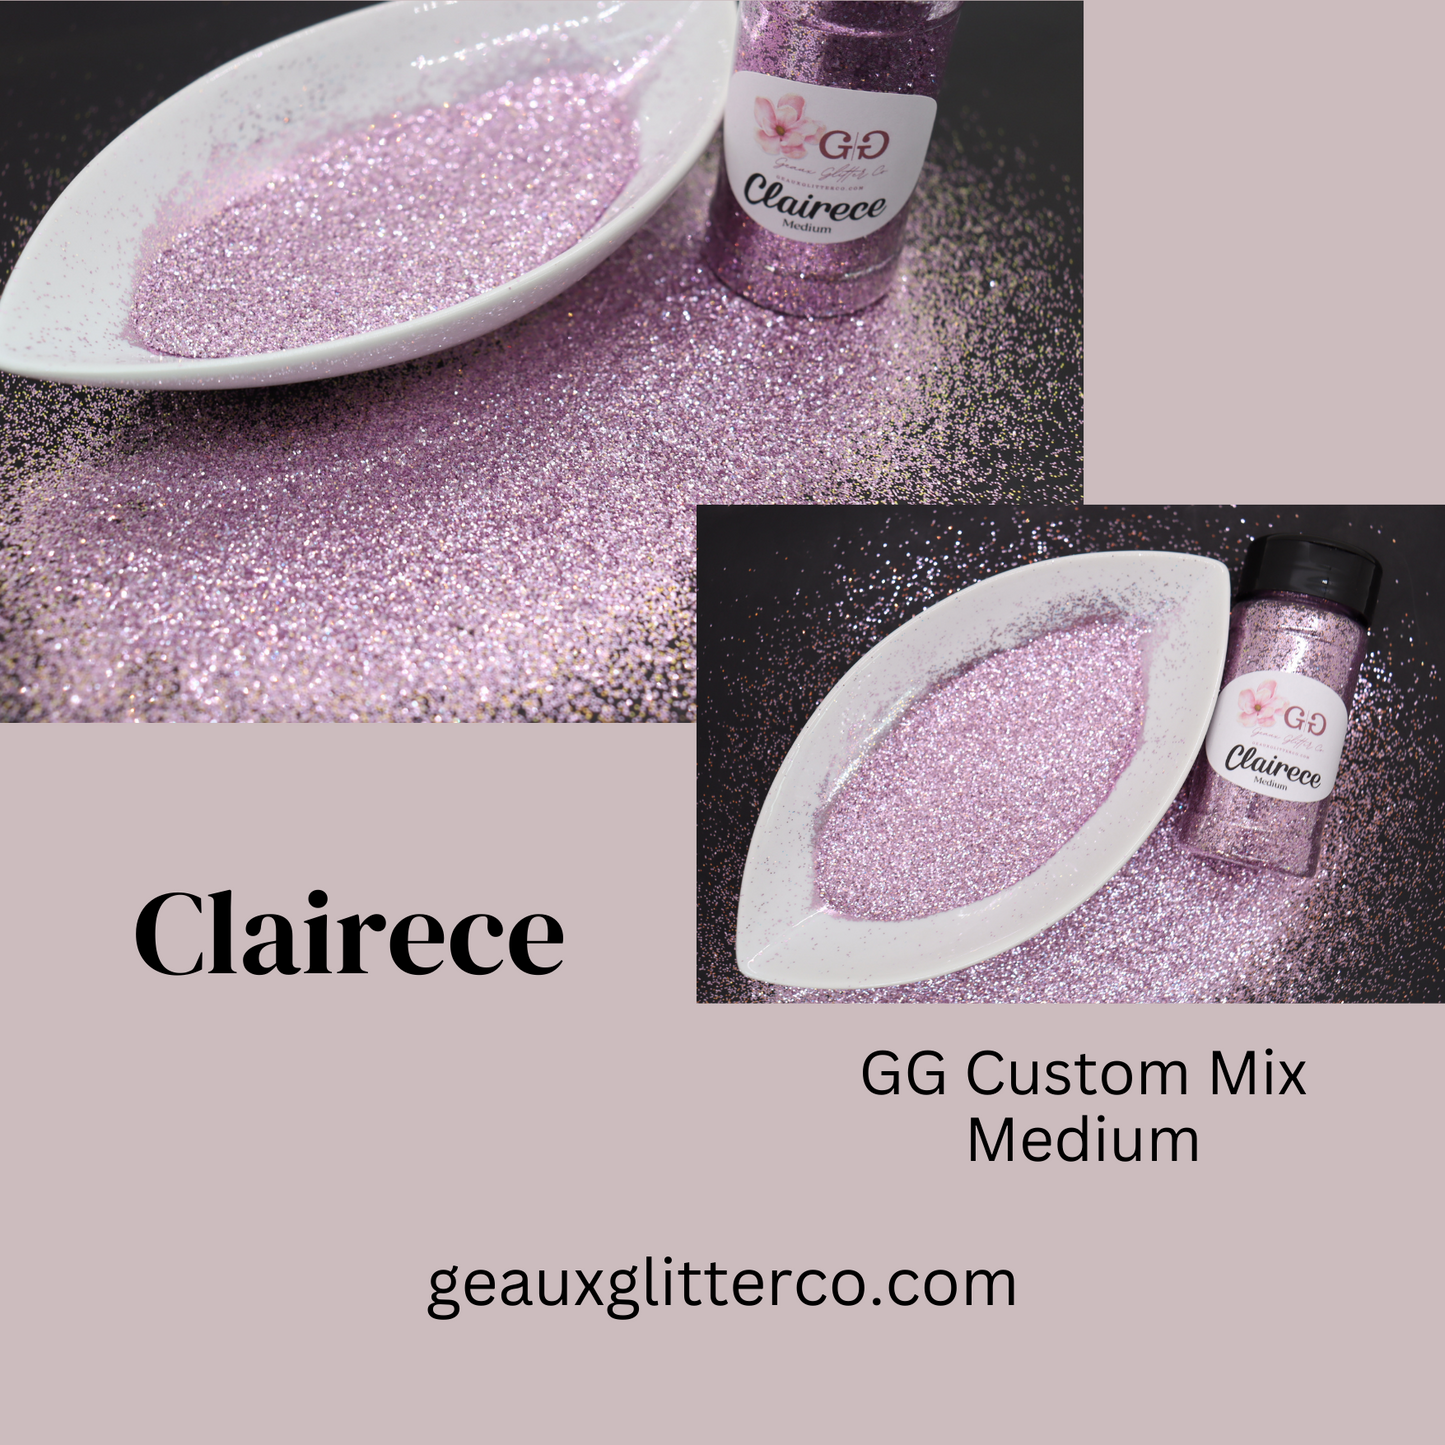 Clairece GG Custom Mix - Medium